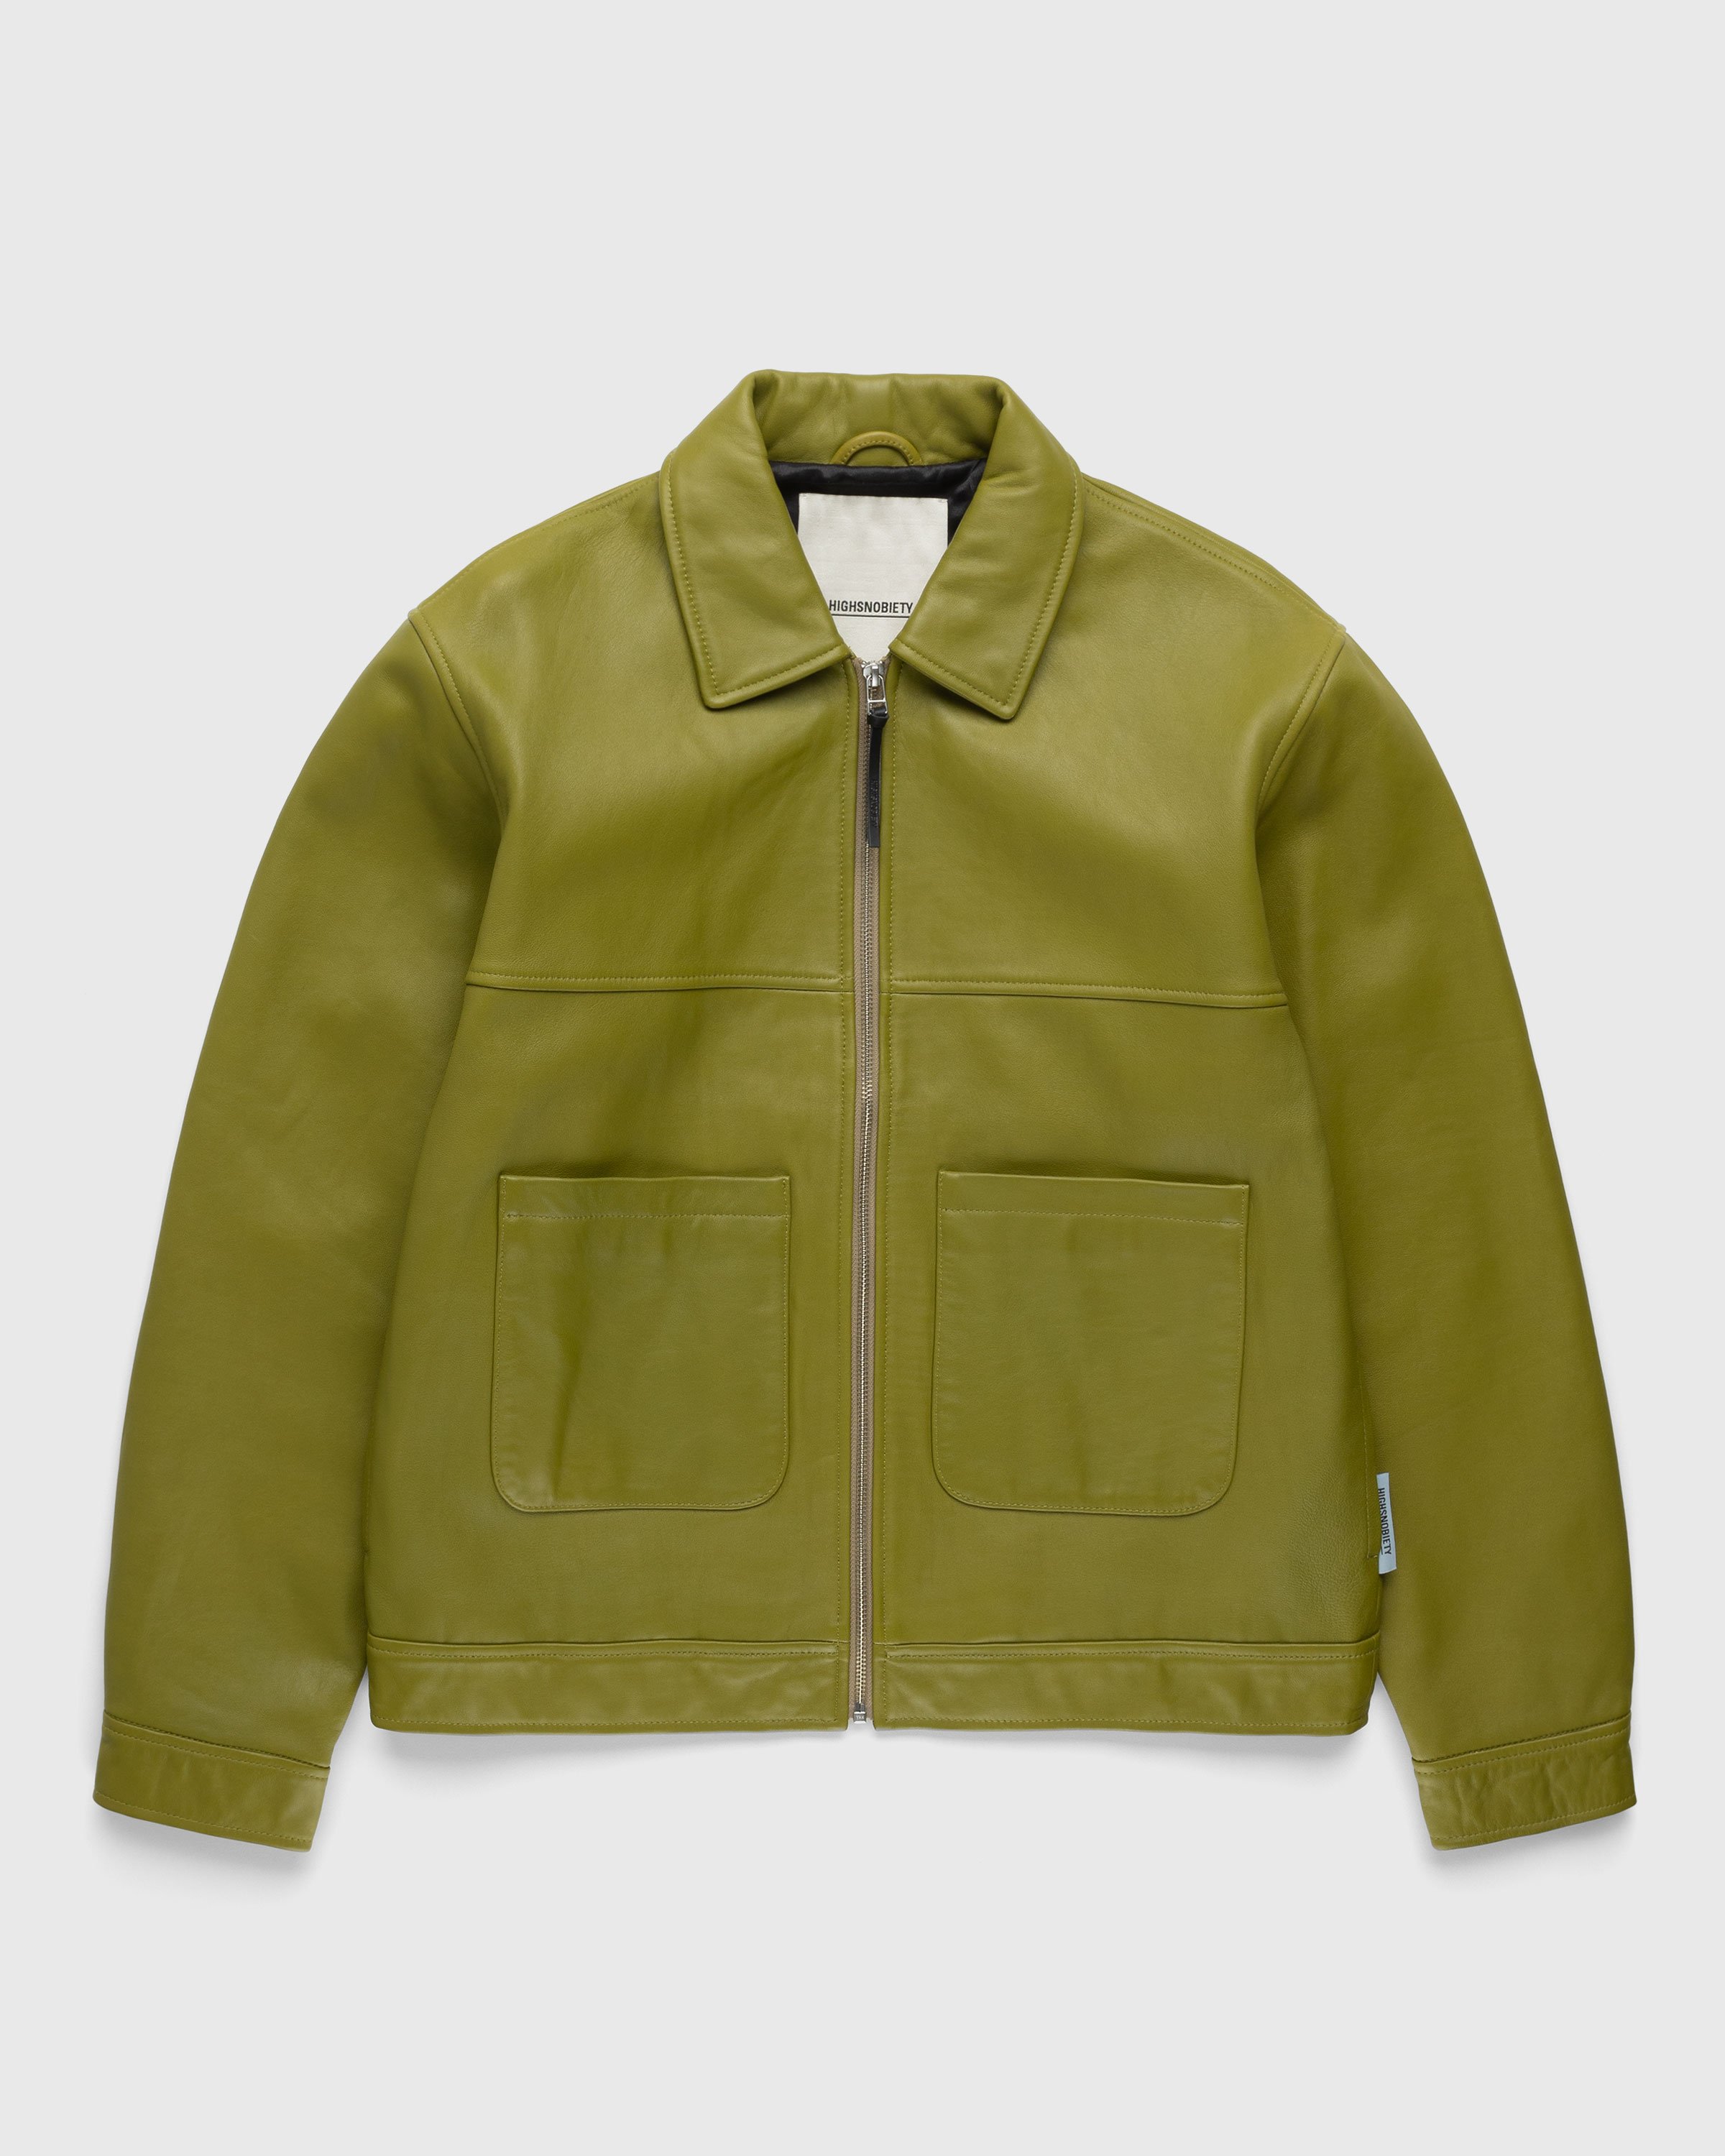 Highsnobiety - Leather Jacket Olive Green - Clothing - Green - Image 1